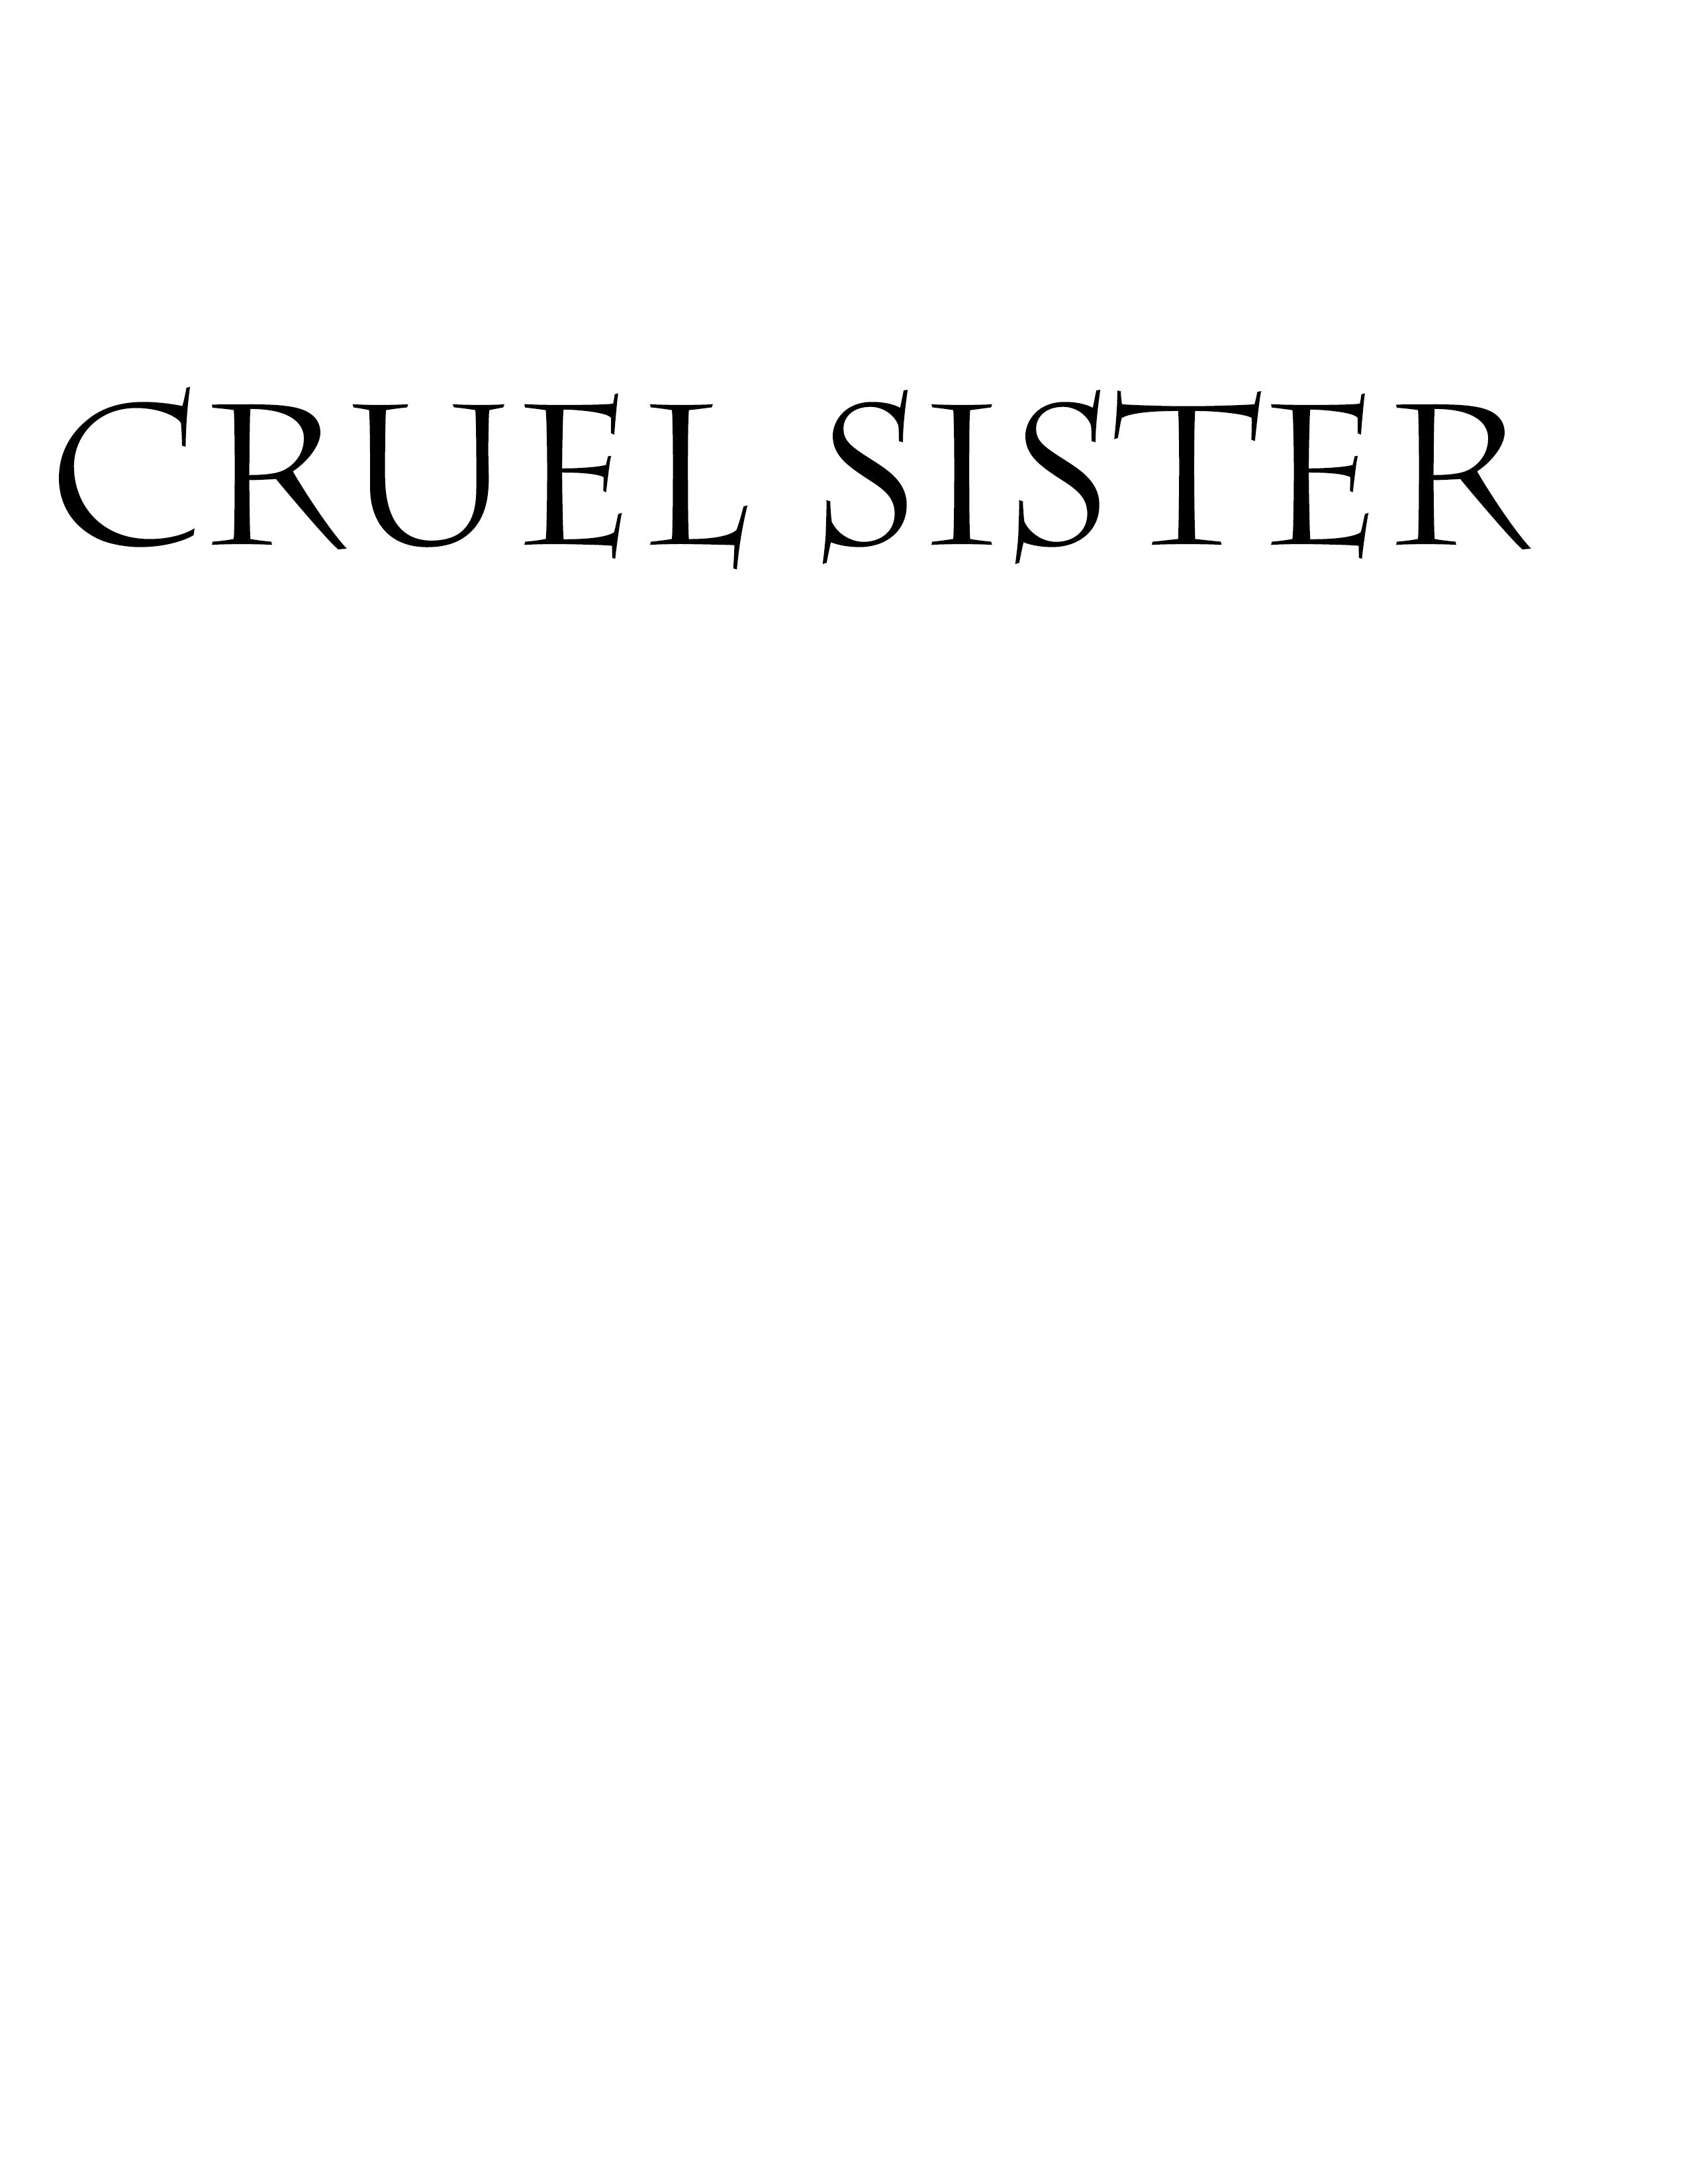 Cruel Sister Vintage